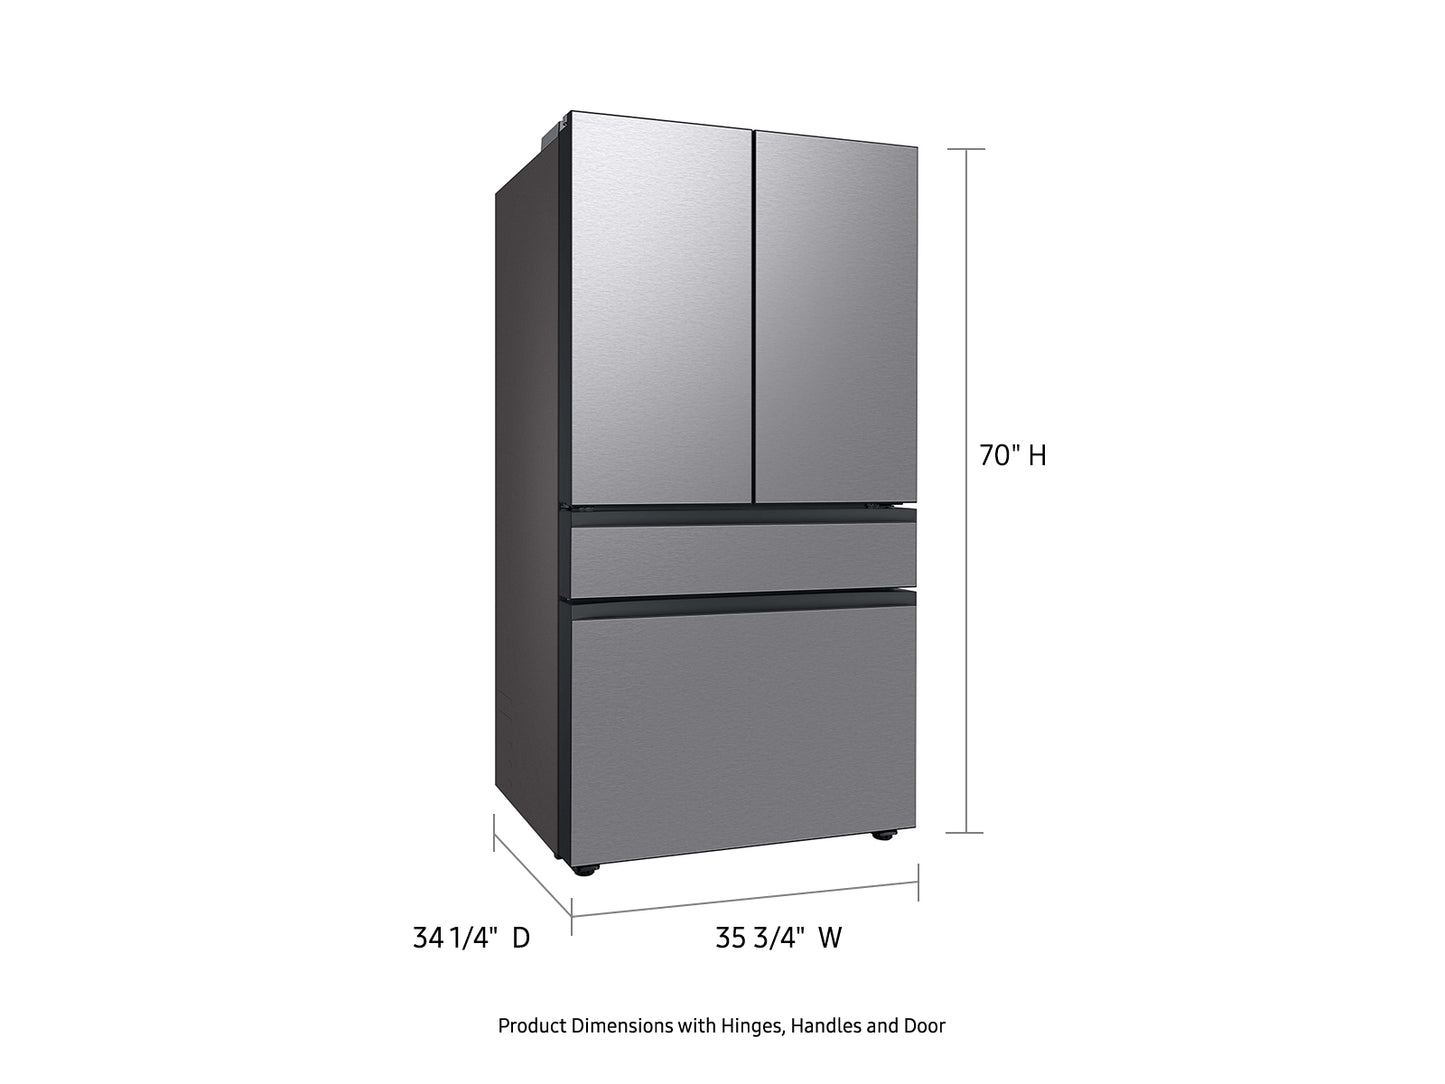 Samsung Bespoke 4-Door French Door Refrigerator (29 cu. ft.) with AutoFill Water Pitcher in Stainless Steel